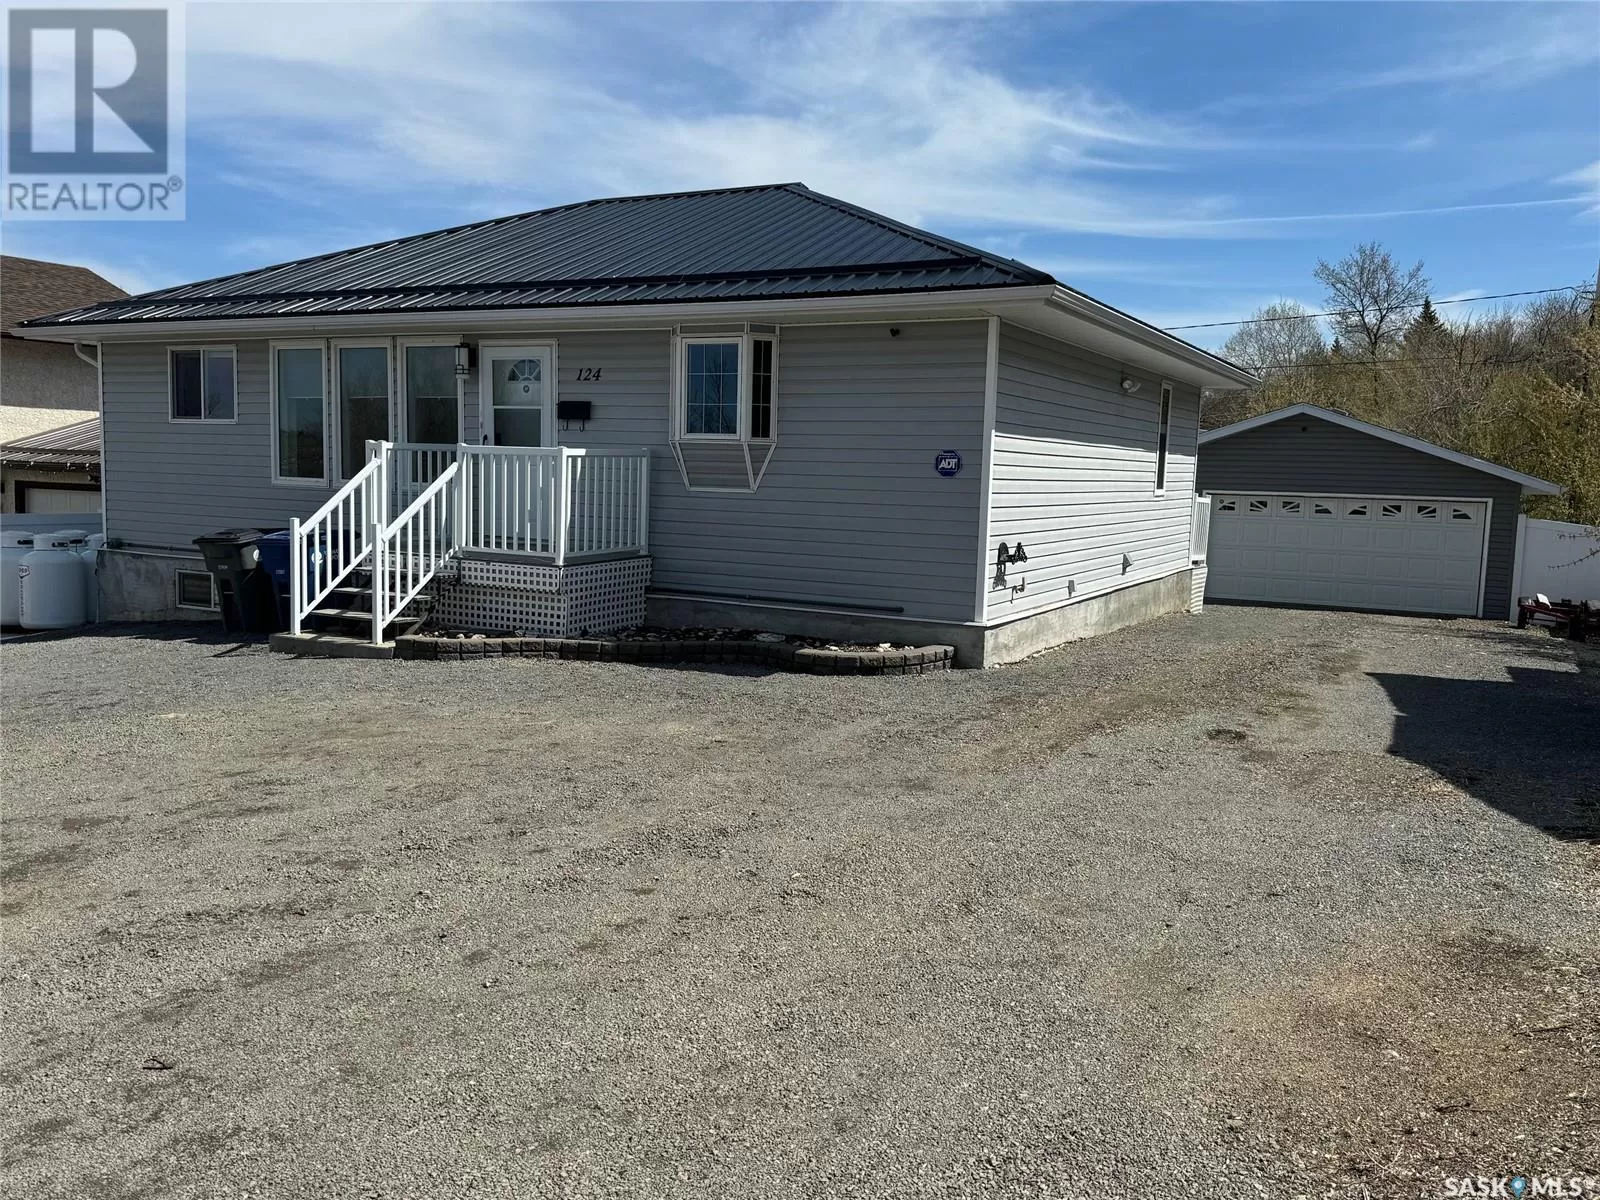 House for rent: 124 Lakeview Crescent, Buena Vista, Saskatchewan S2V 1A7